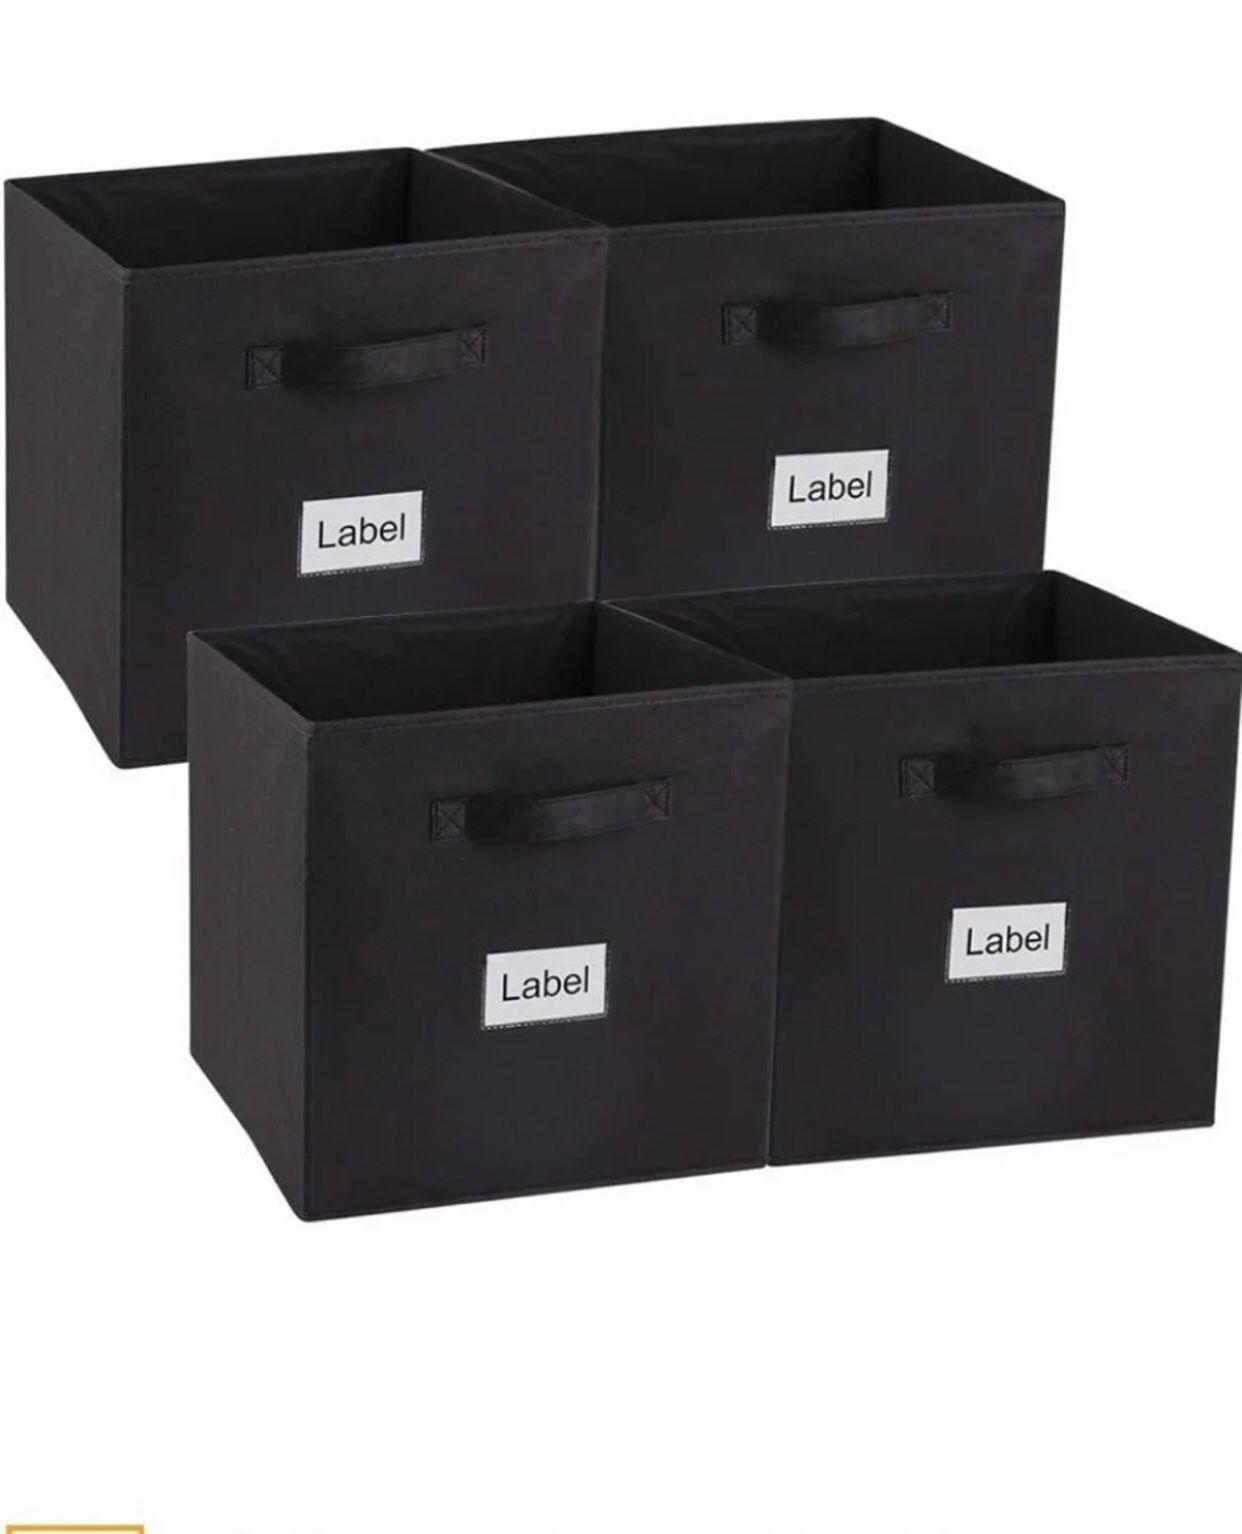 Large Foldable Cube Storage Bins